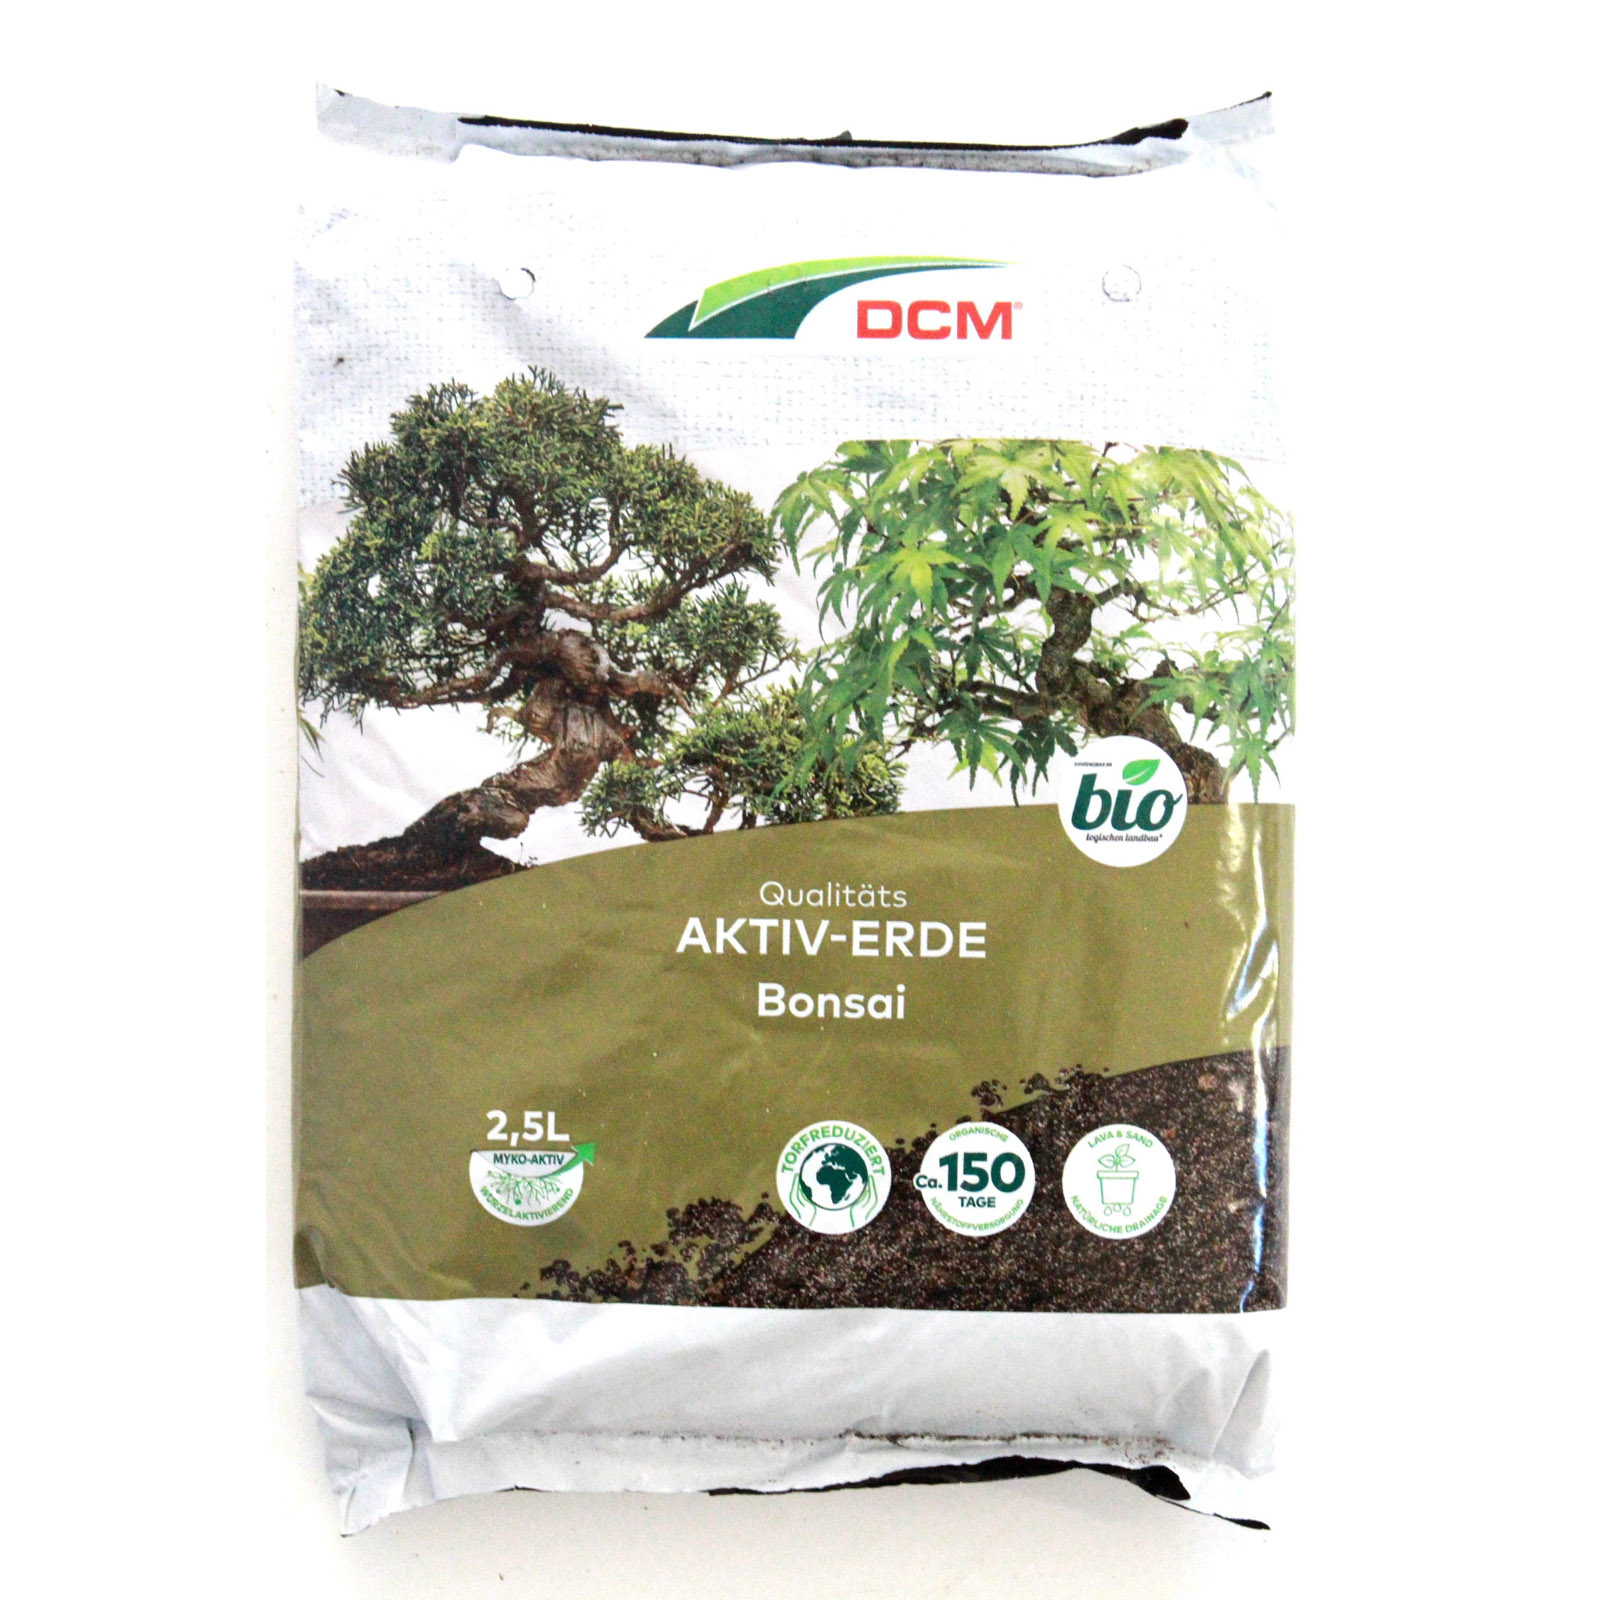 Cuxin DCM 2,5 l Aktiv-Erde Bonsai BIO Pflanzenerde Blumenerde 